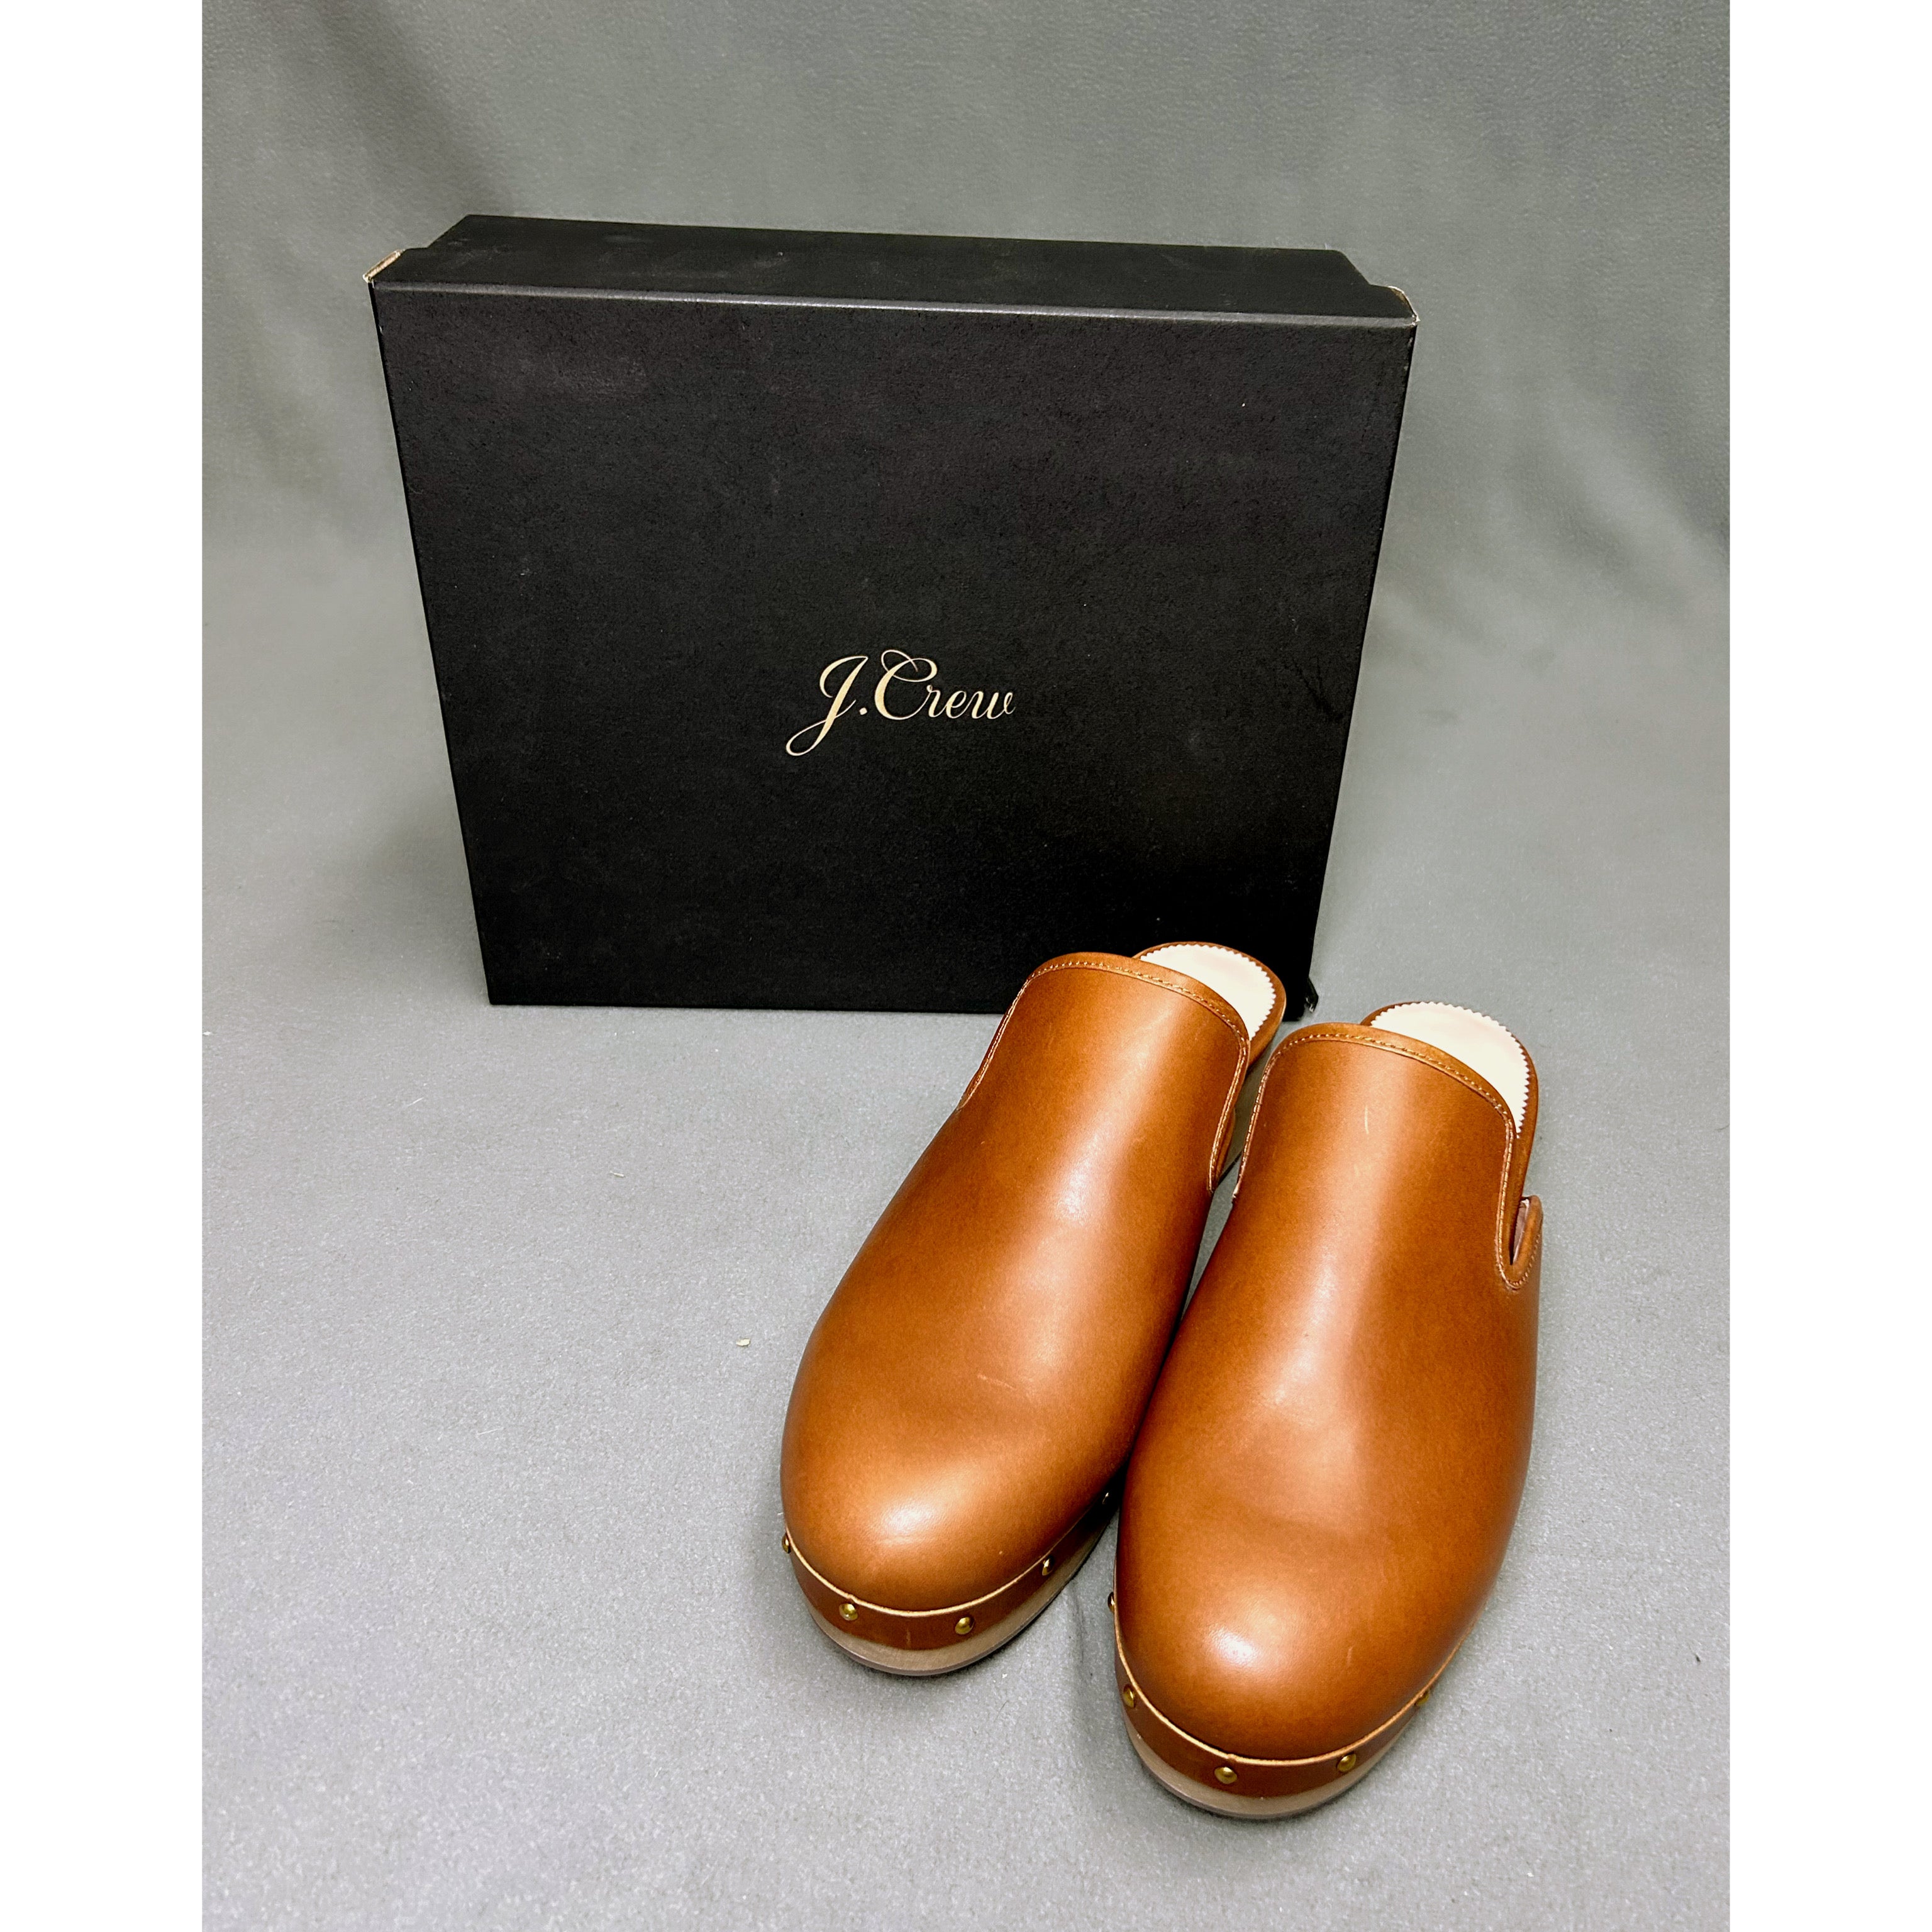 J. Crew brown leather Dakota clogs, size 9.5, NEW IN BOX!